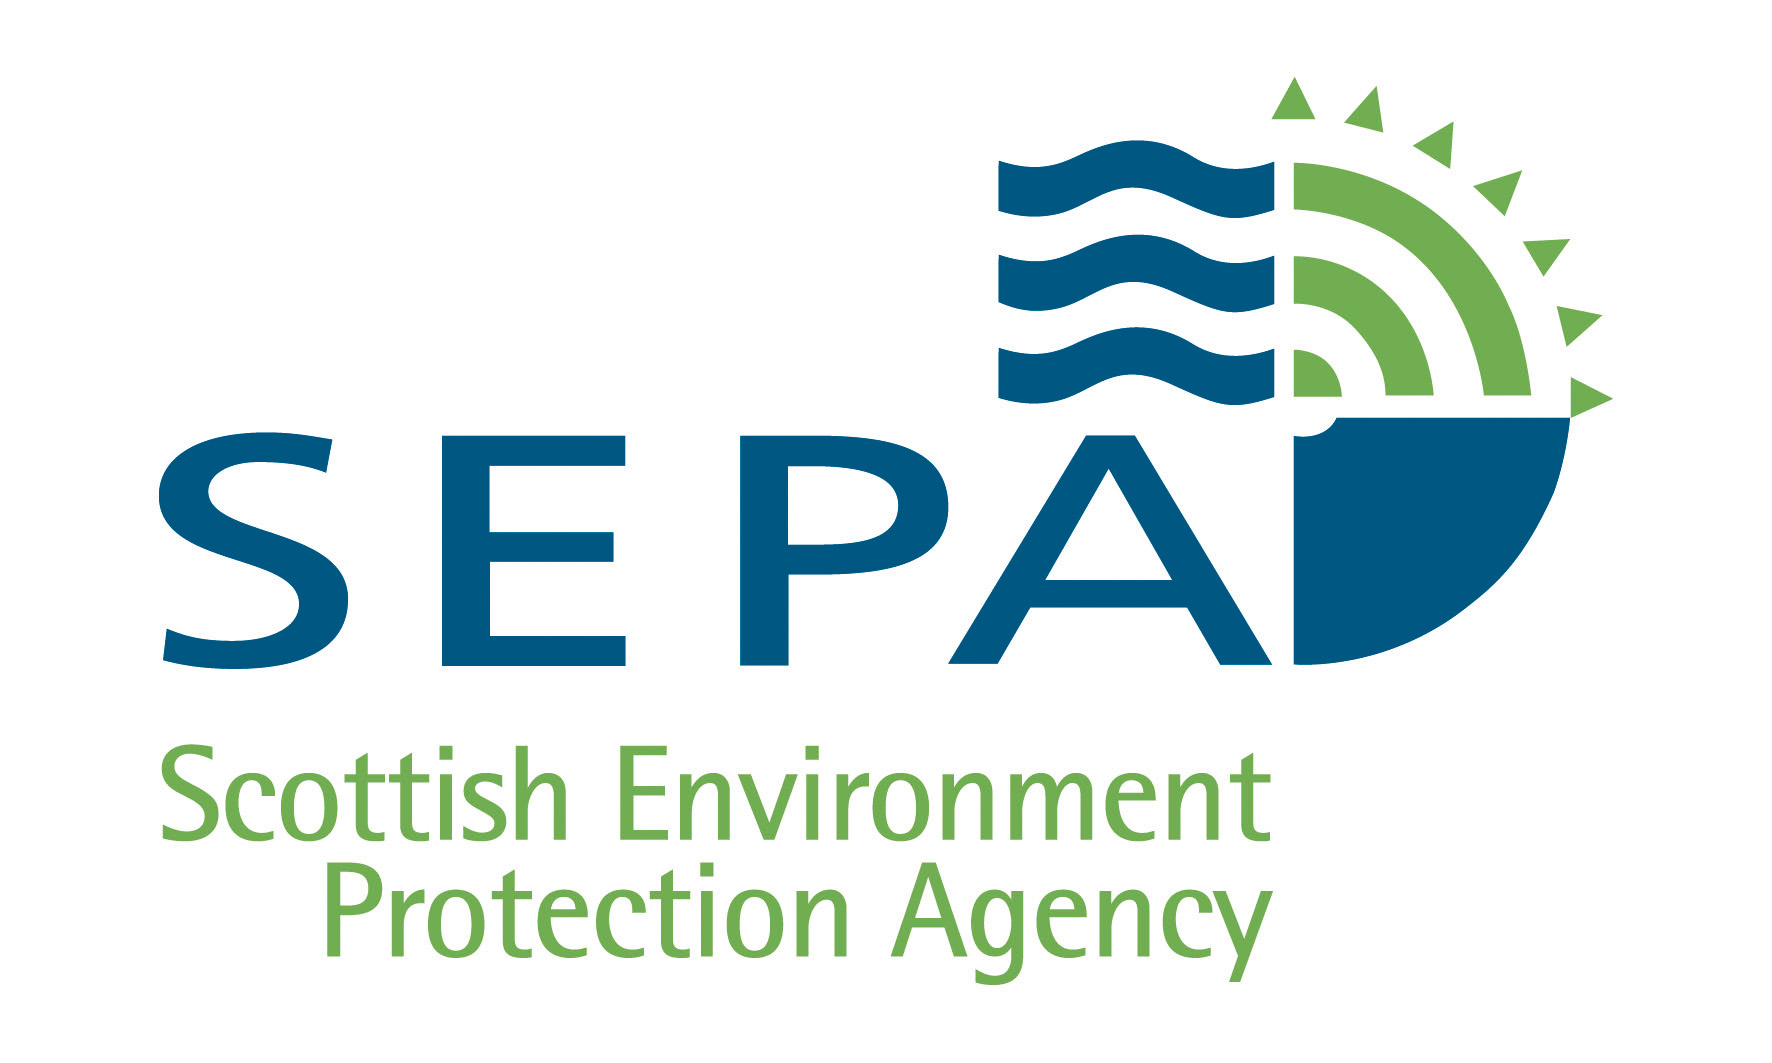 SEPA (Scottish Environment Protection Agency)